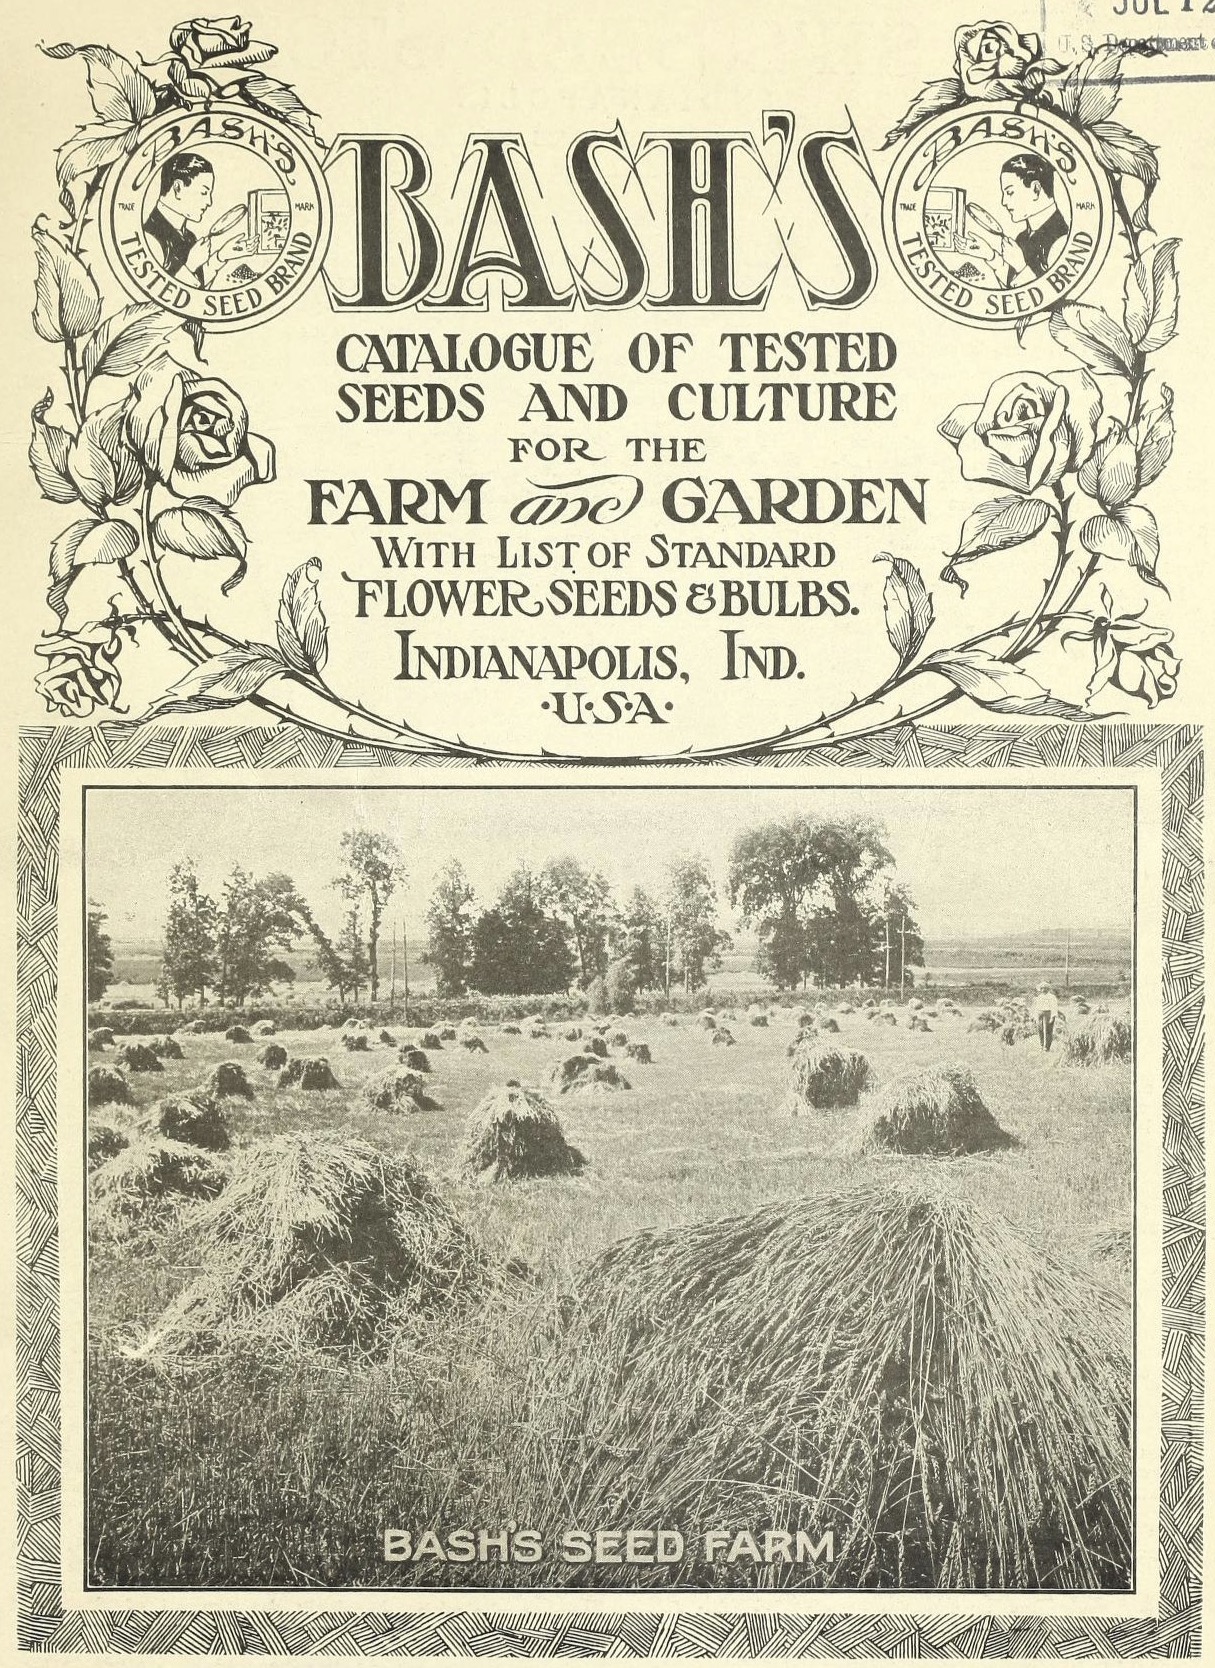 Bash Seed Company